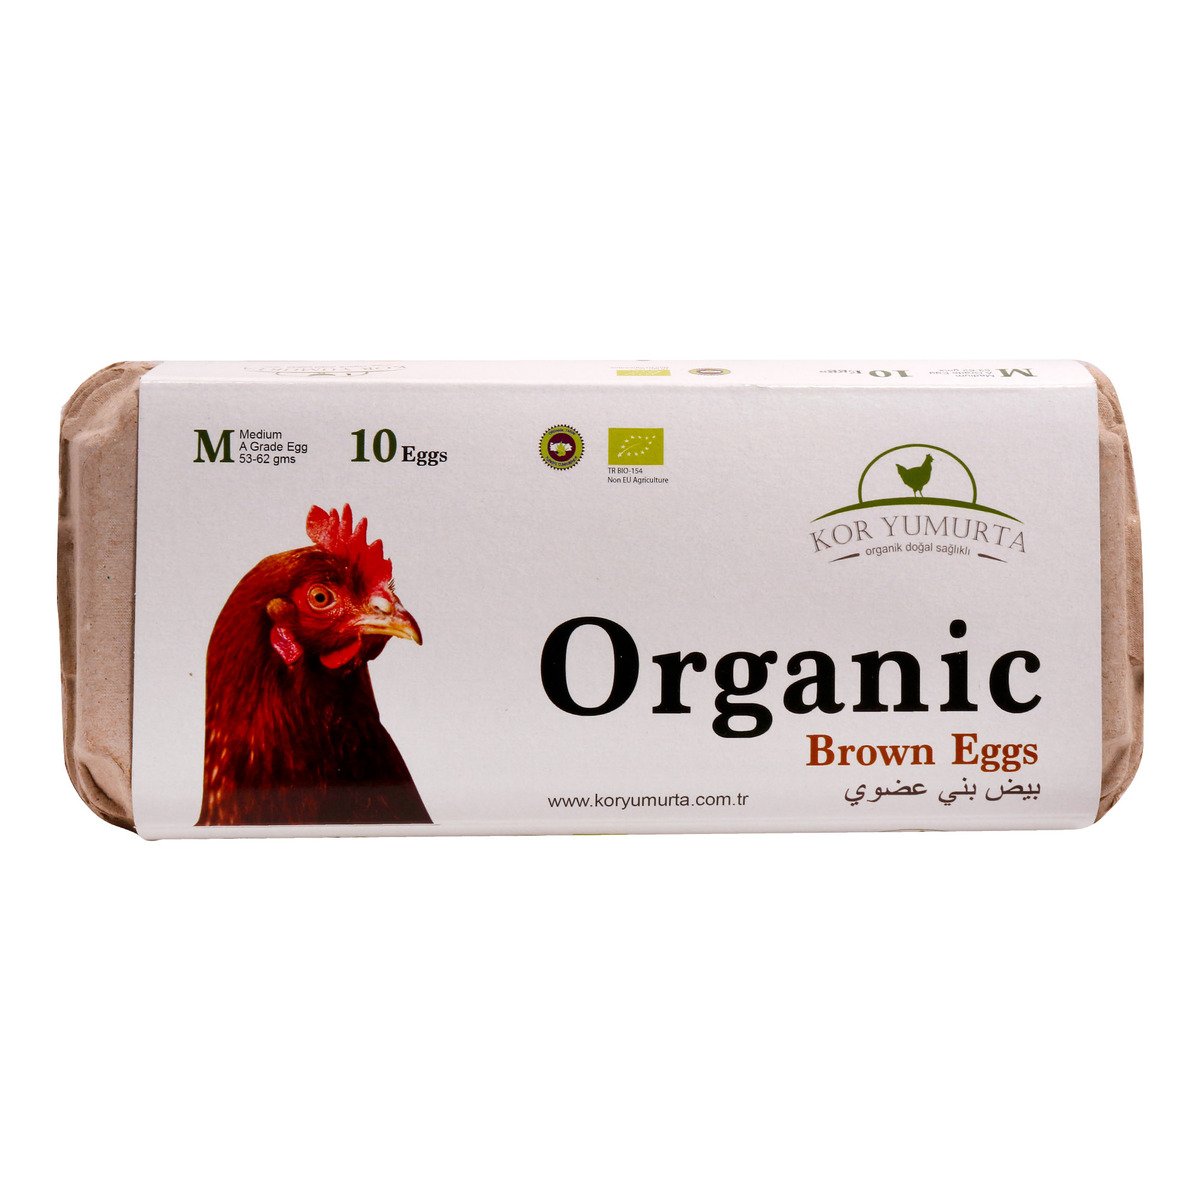 Kor Yumurta Organic Brown Eggs 10 pcs